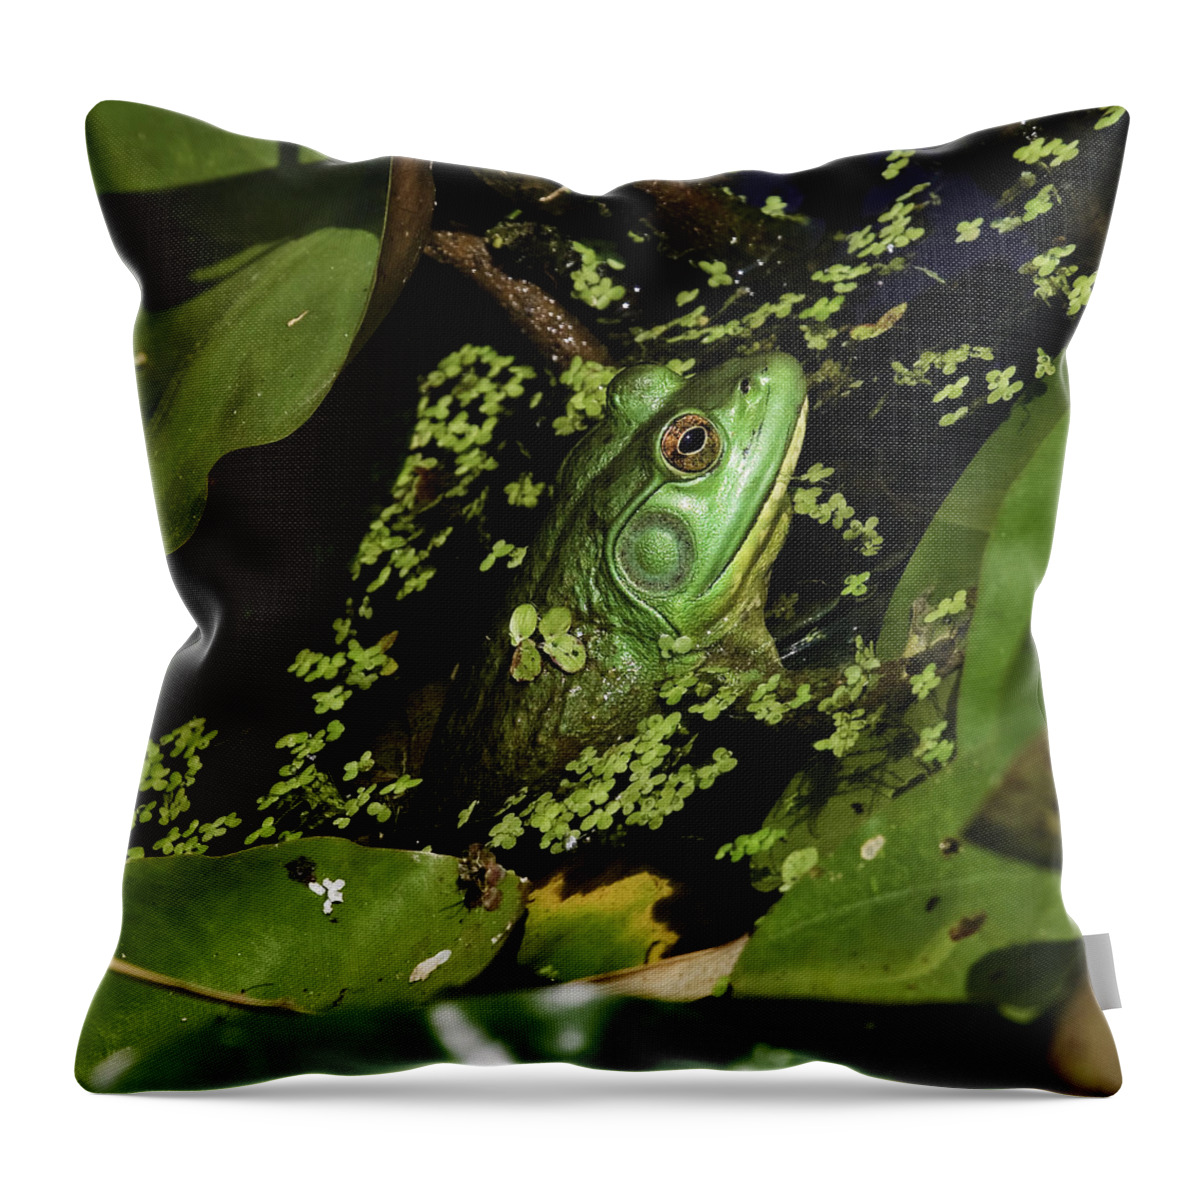 Kenilworth Aquatic Park Throw Pillow featuring the photograph Rana clamitans or Green Frog #2 by Perla Copernik